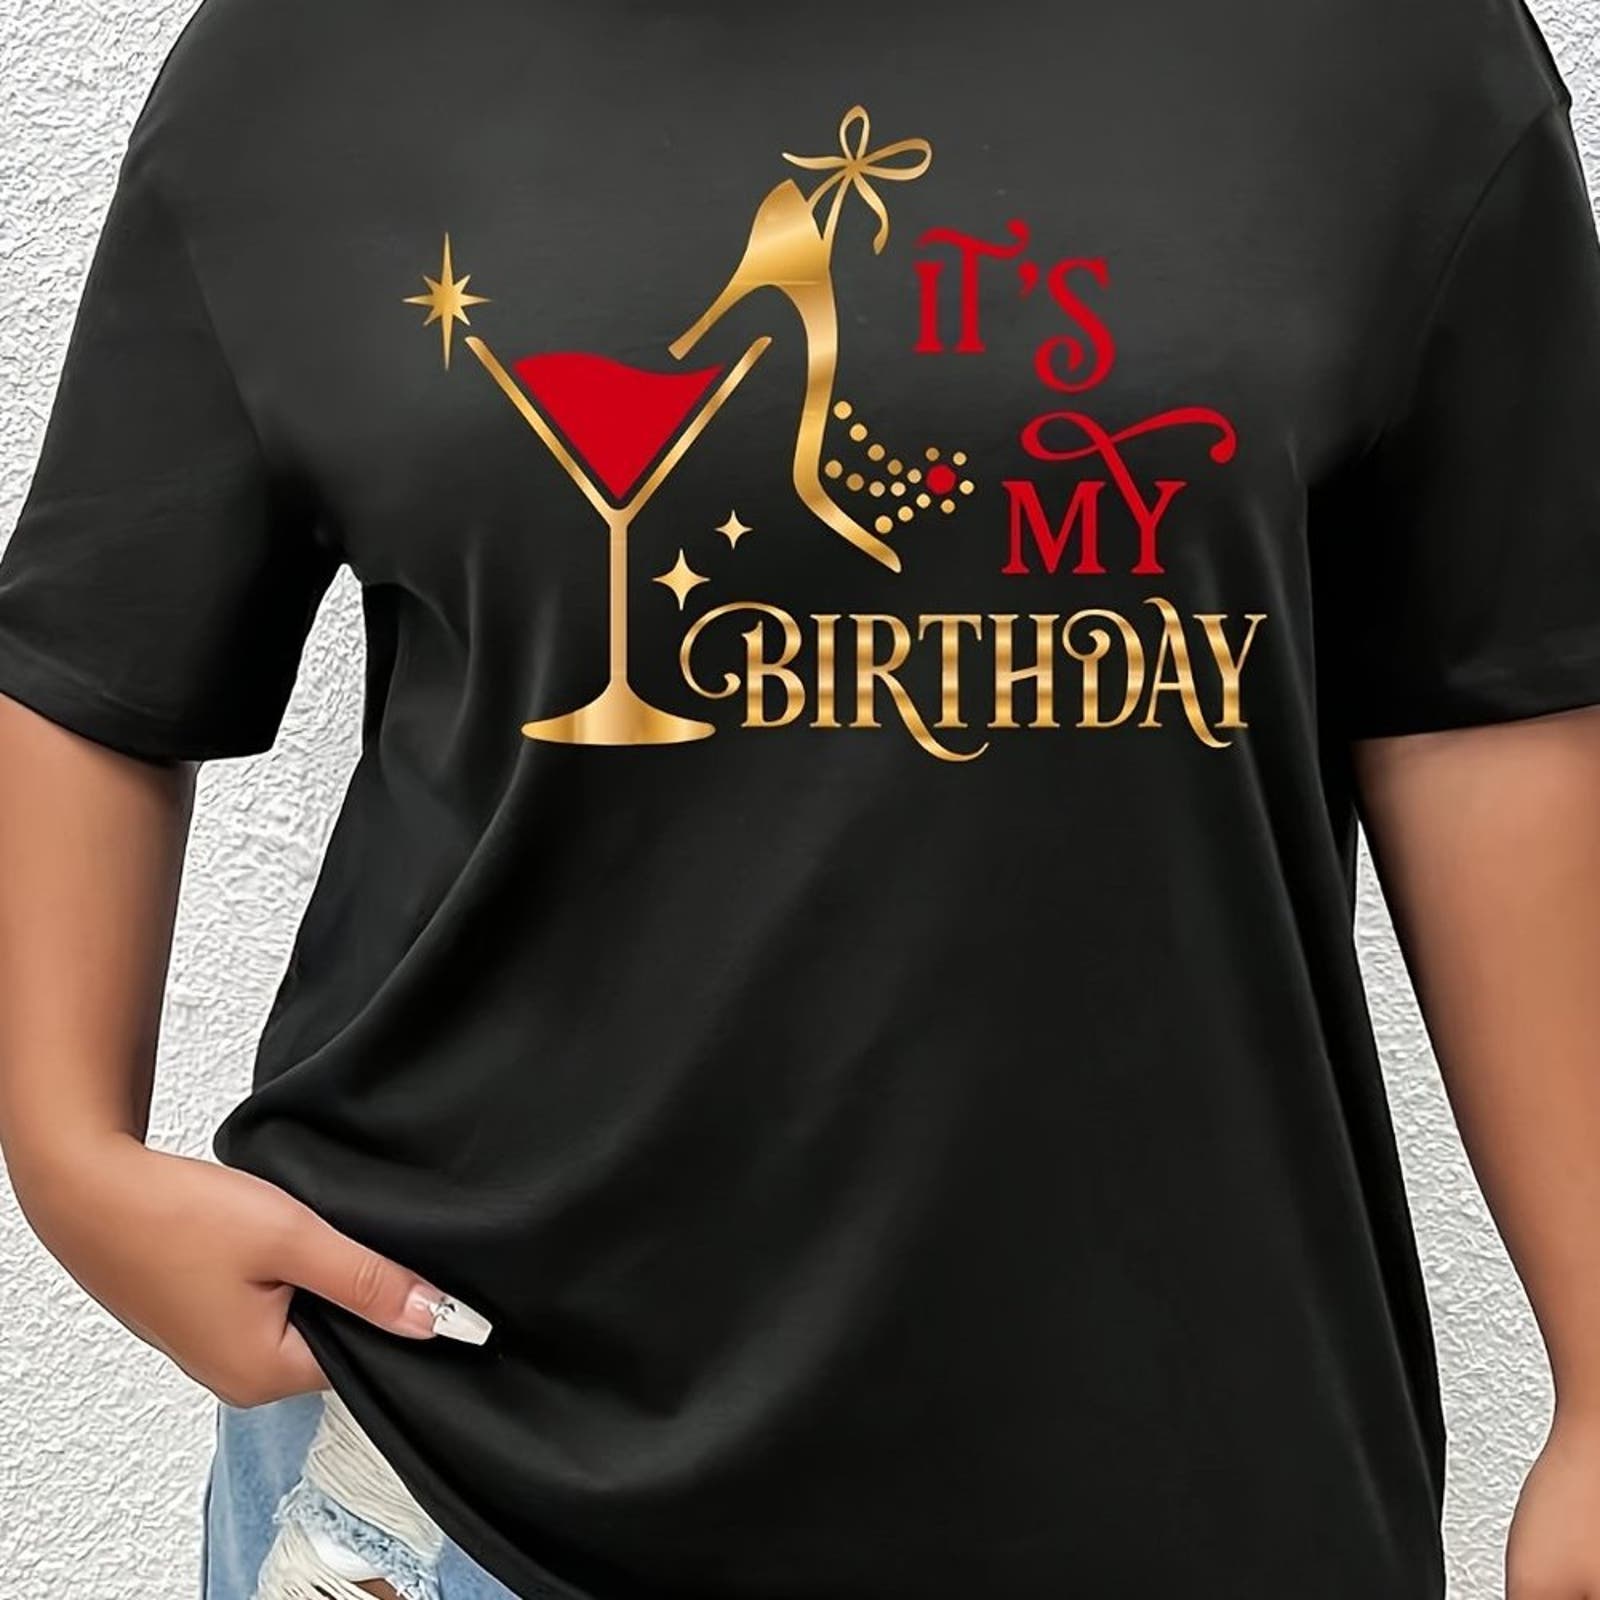 It' My Birthday Queen T-shirt, Short Sleeve Crew Neck